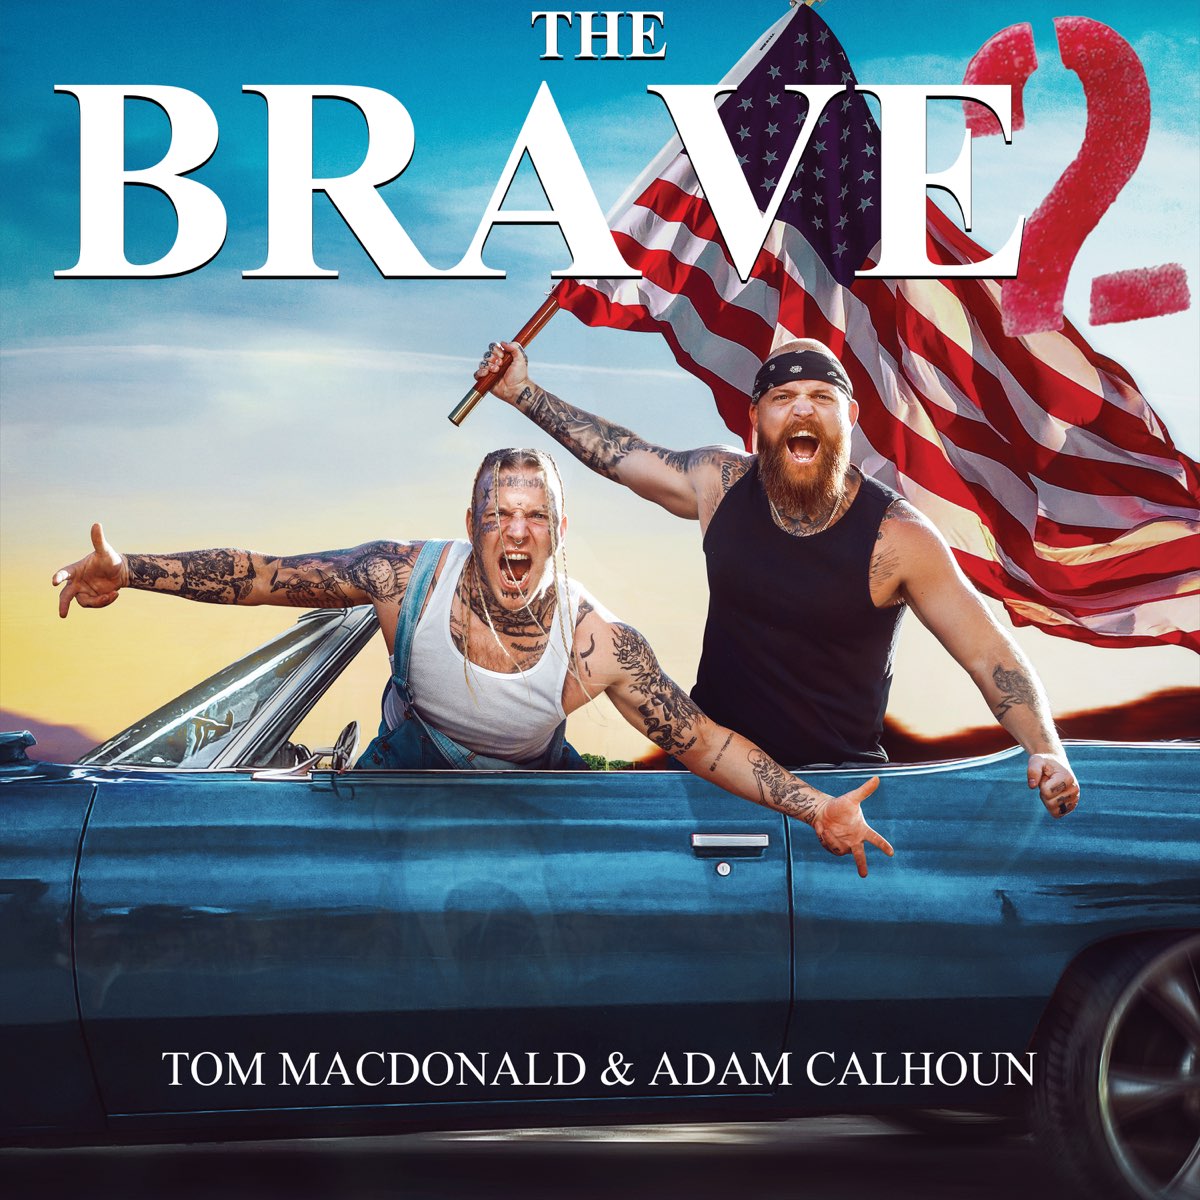 ‎The Brave II - Album by Tom MacDonald & Adam Calhoun - Apple Music